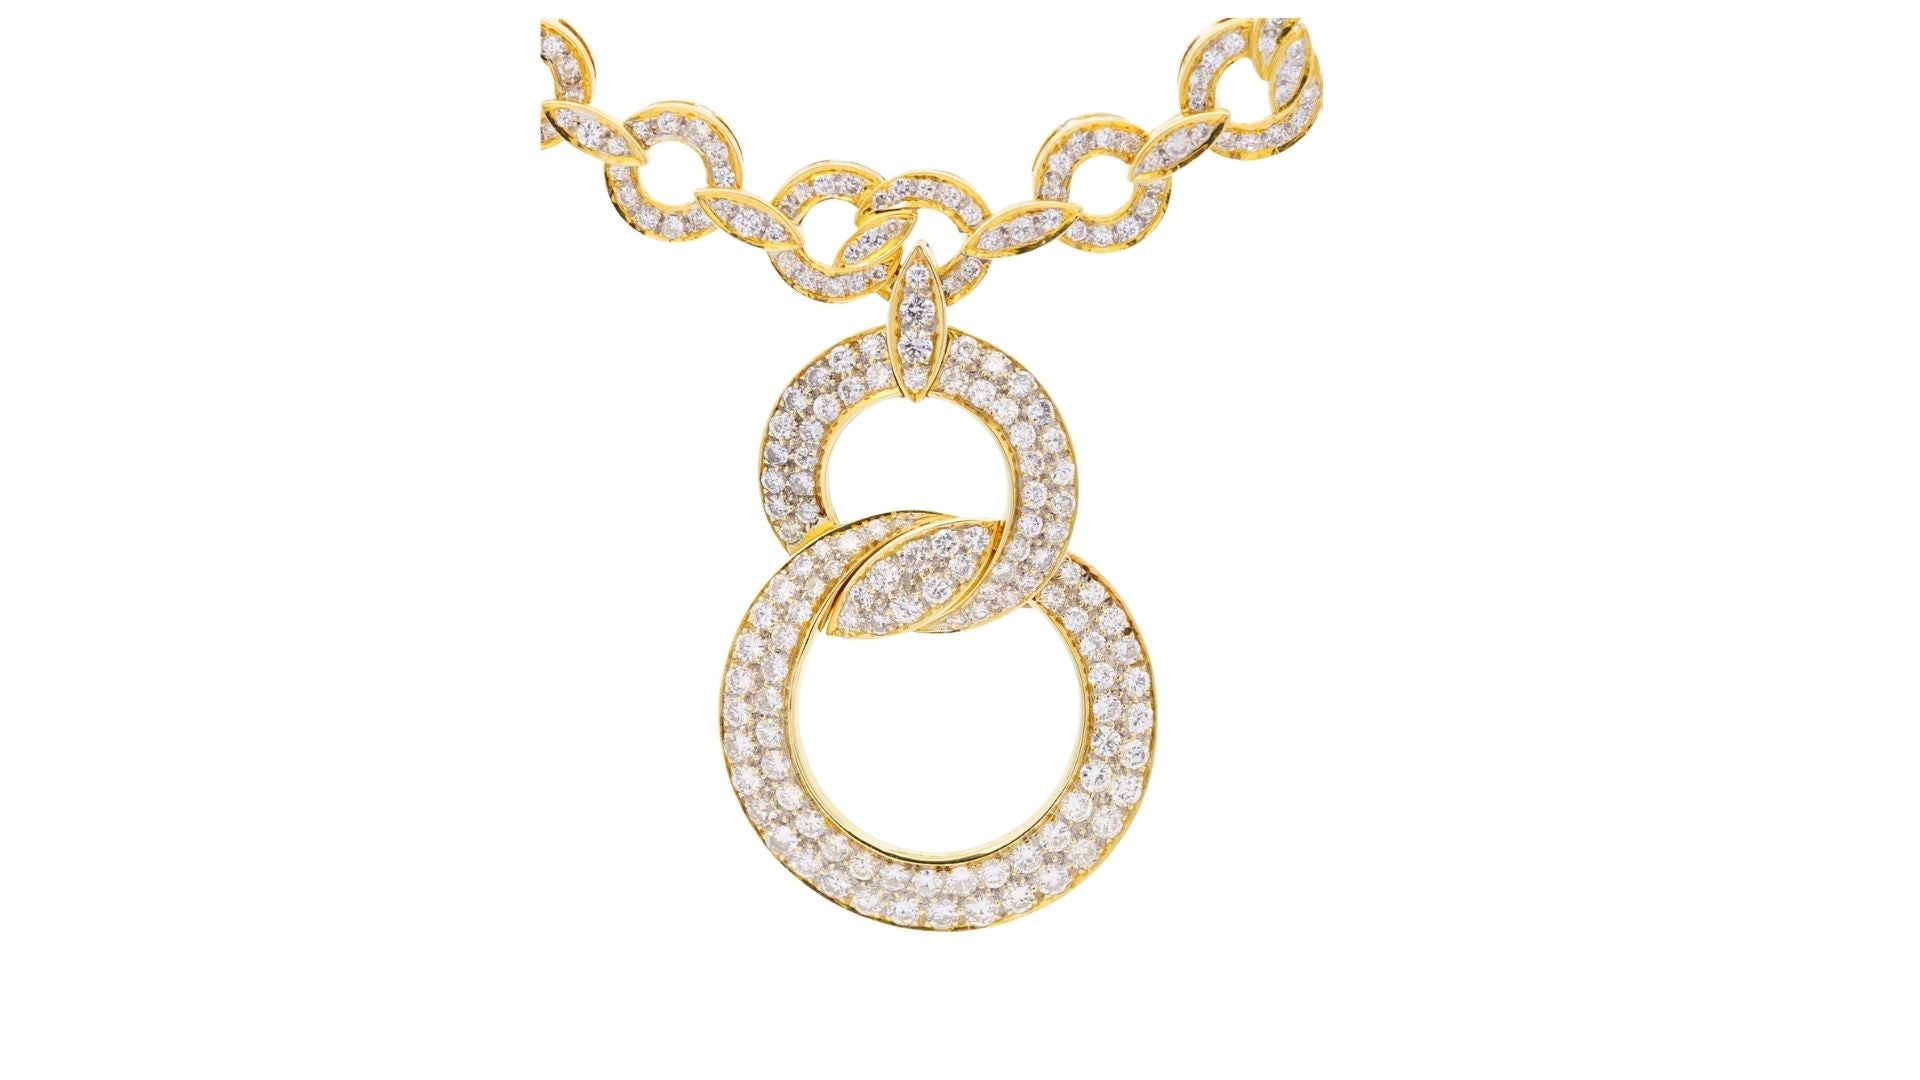 Natural-Diamond-16-Carat-Round-Brilliant-Cut-Interlocking-Circle-Pendant-Necklace-in-18K-Yellow-Gold-Necklace-2_6d2256c9-45ce-45e4-ad39-1497c9e8b06c.jpg